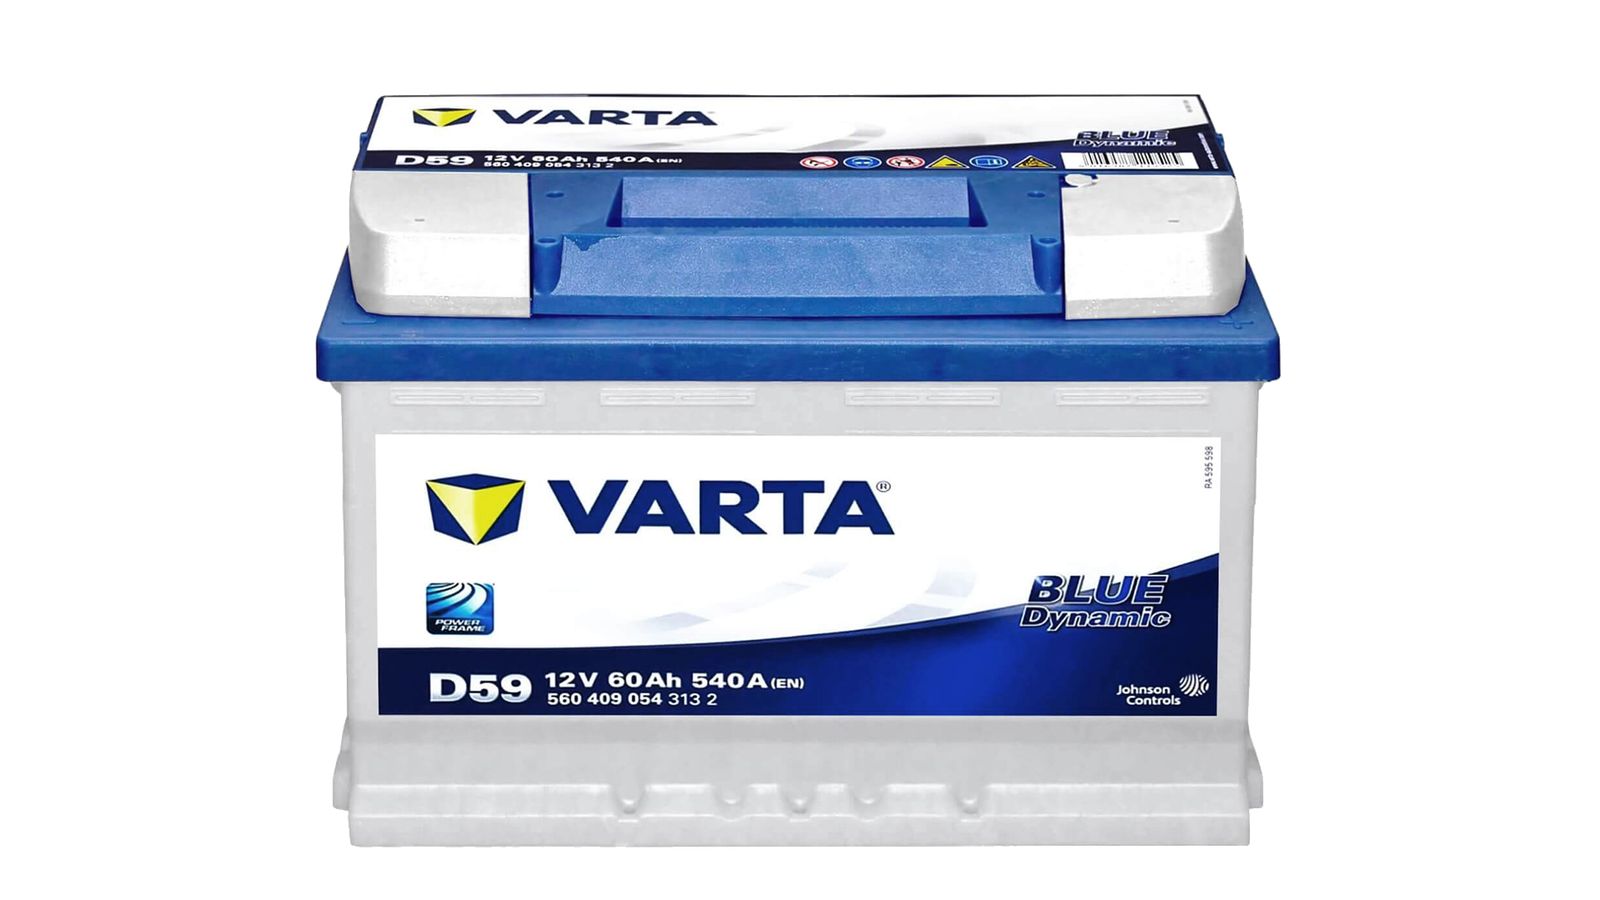 Аккумуляторная батарея VARTA BLUE 6СТ60 D59 * 560 409 054 фотография №1